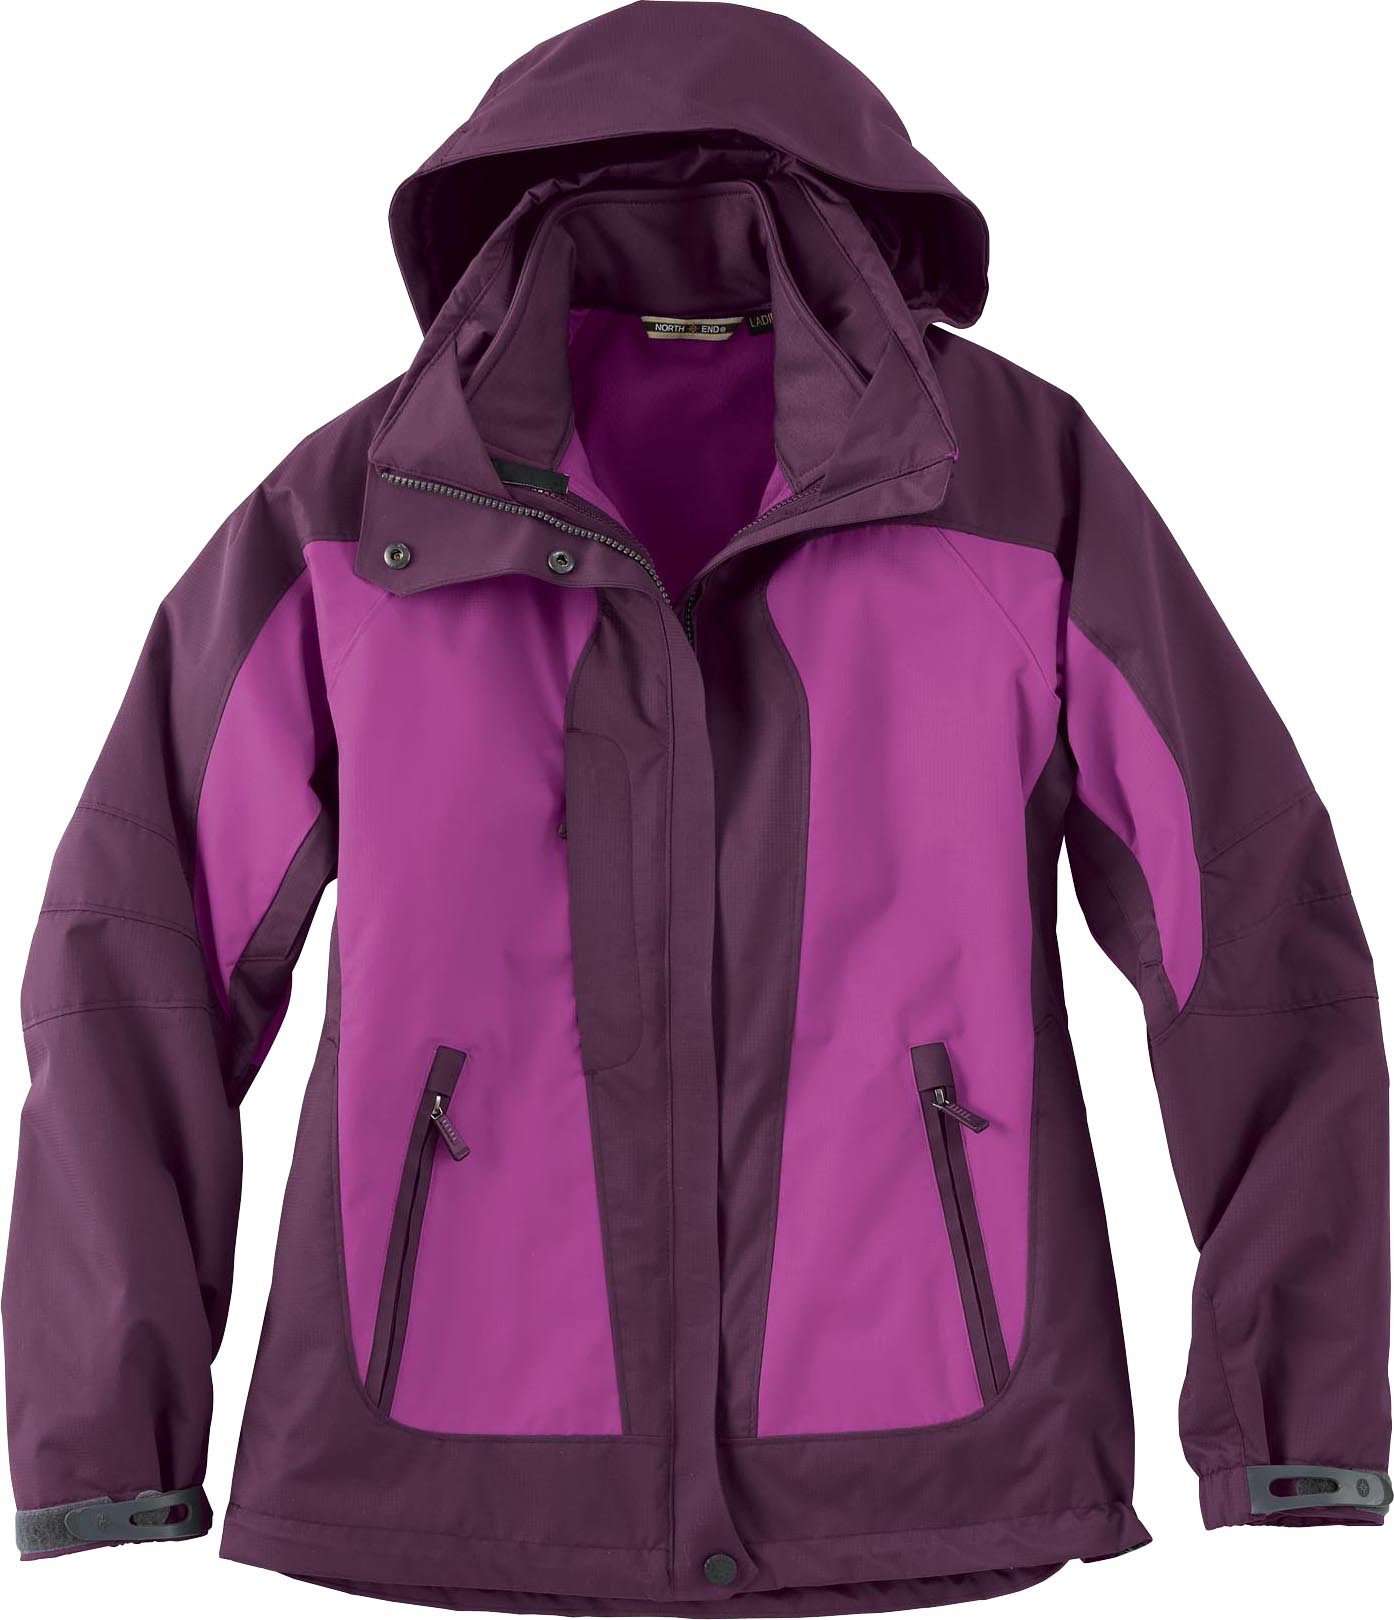 Ash City UTK 2 Warm.Logik 78049 - Ladies' Performance 3-In-1 Seam-Sealed Mid-Length Jacket